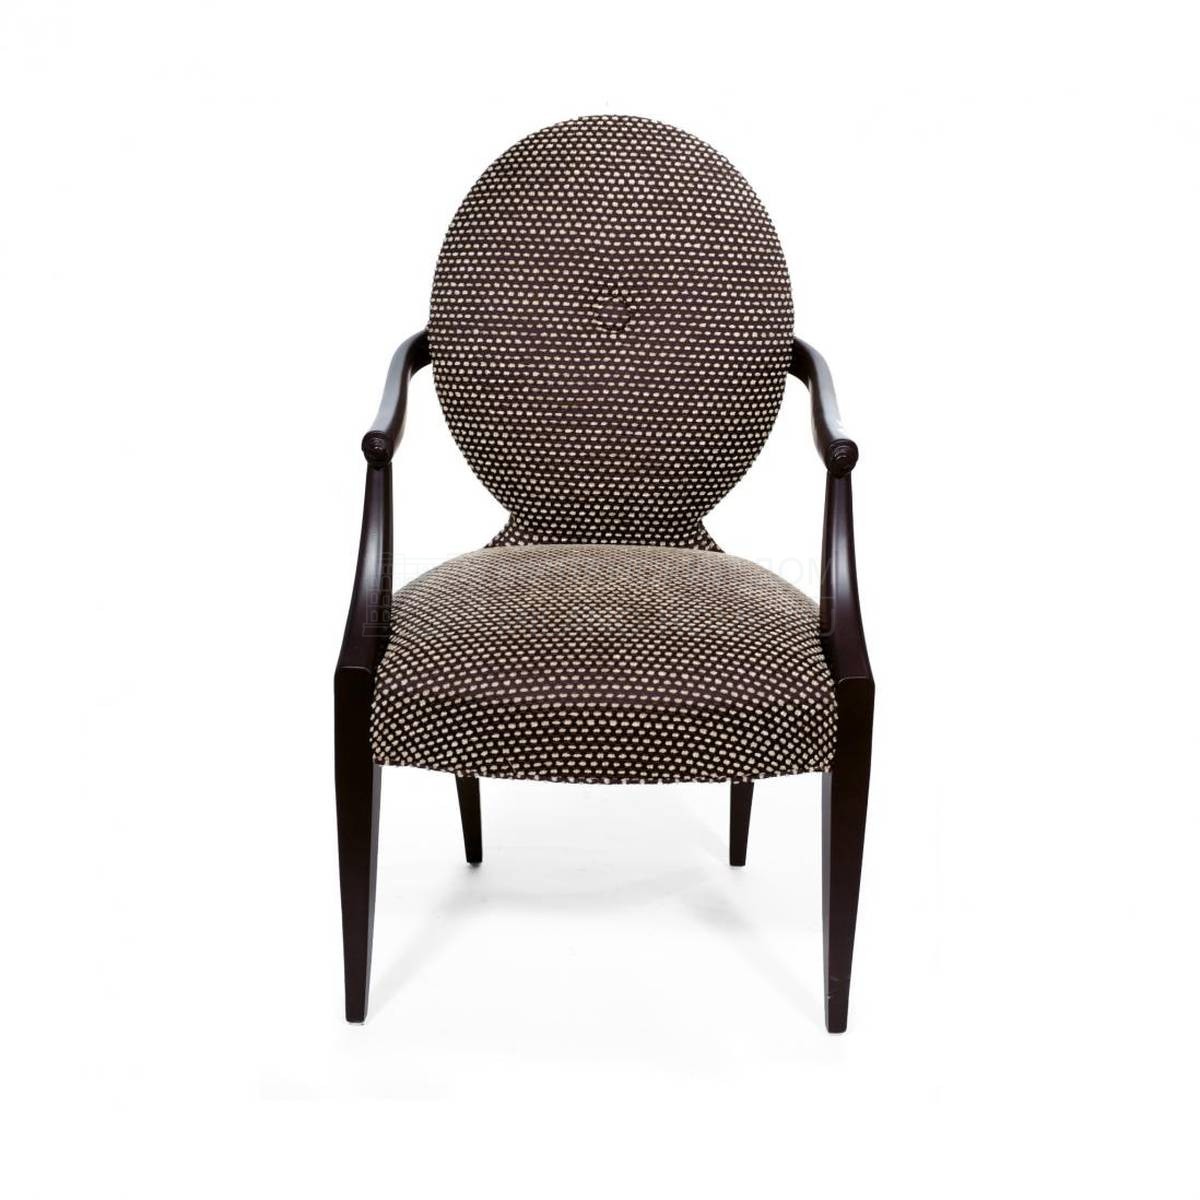 Полукресло Casper Arm Chair из Италии фабрики RUBELLI Casa